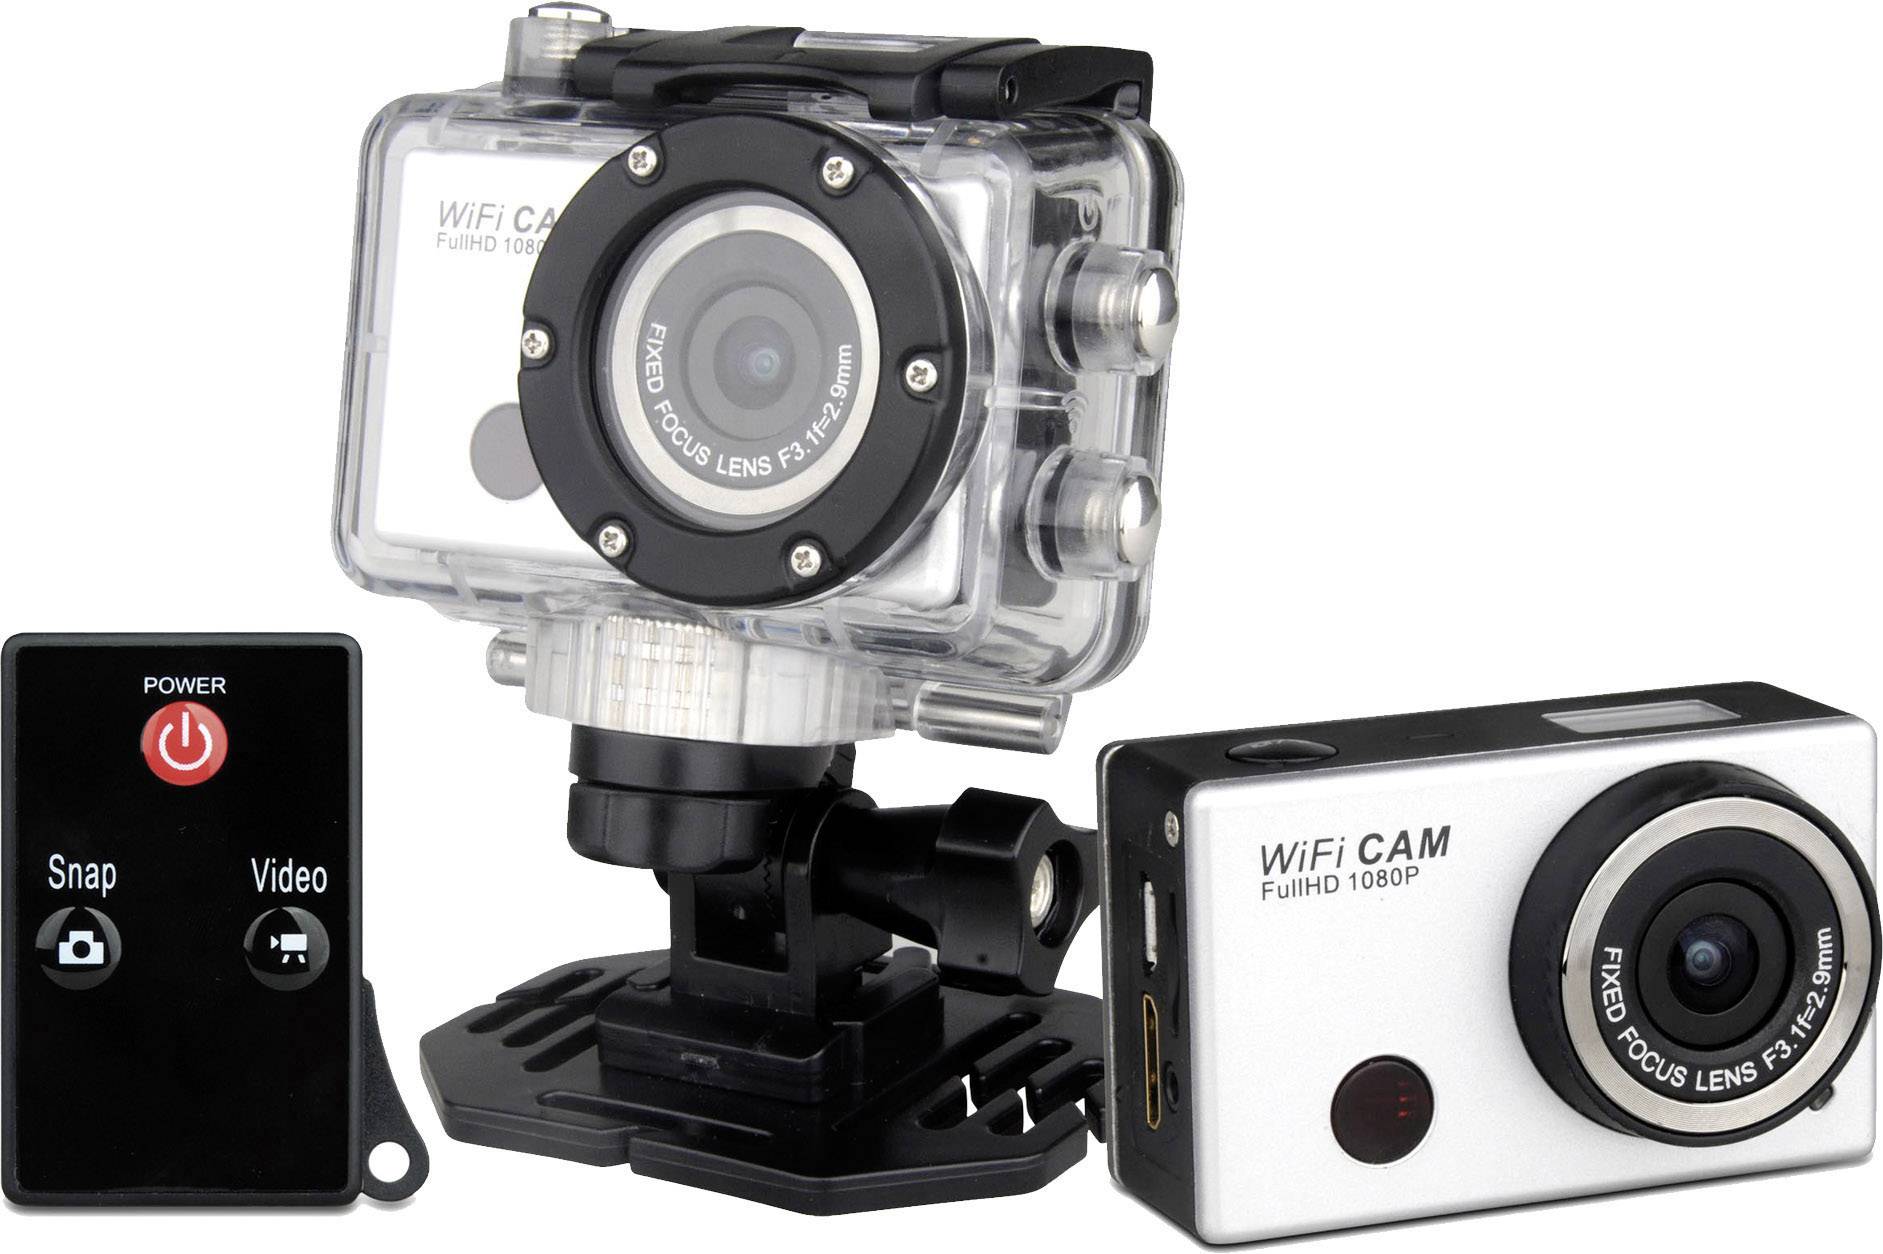 Verslaafd genade iets Denver AC-5000 W Action camera Web cam, Waterproof, Shockproof, Dustproof,  Full HD, Wi-Fi | Conrad.com